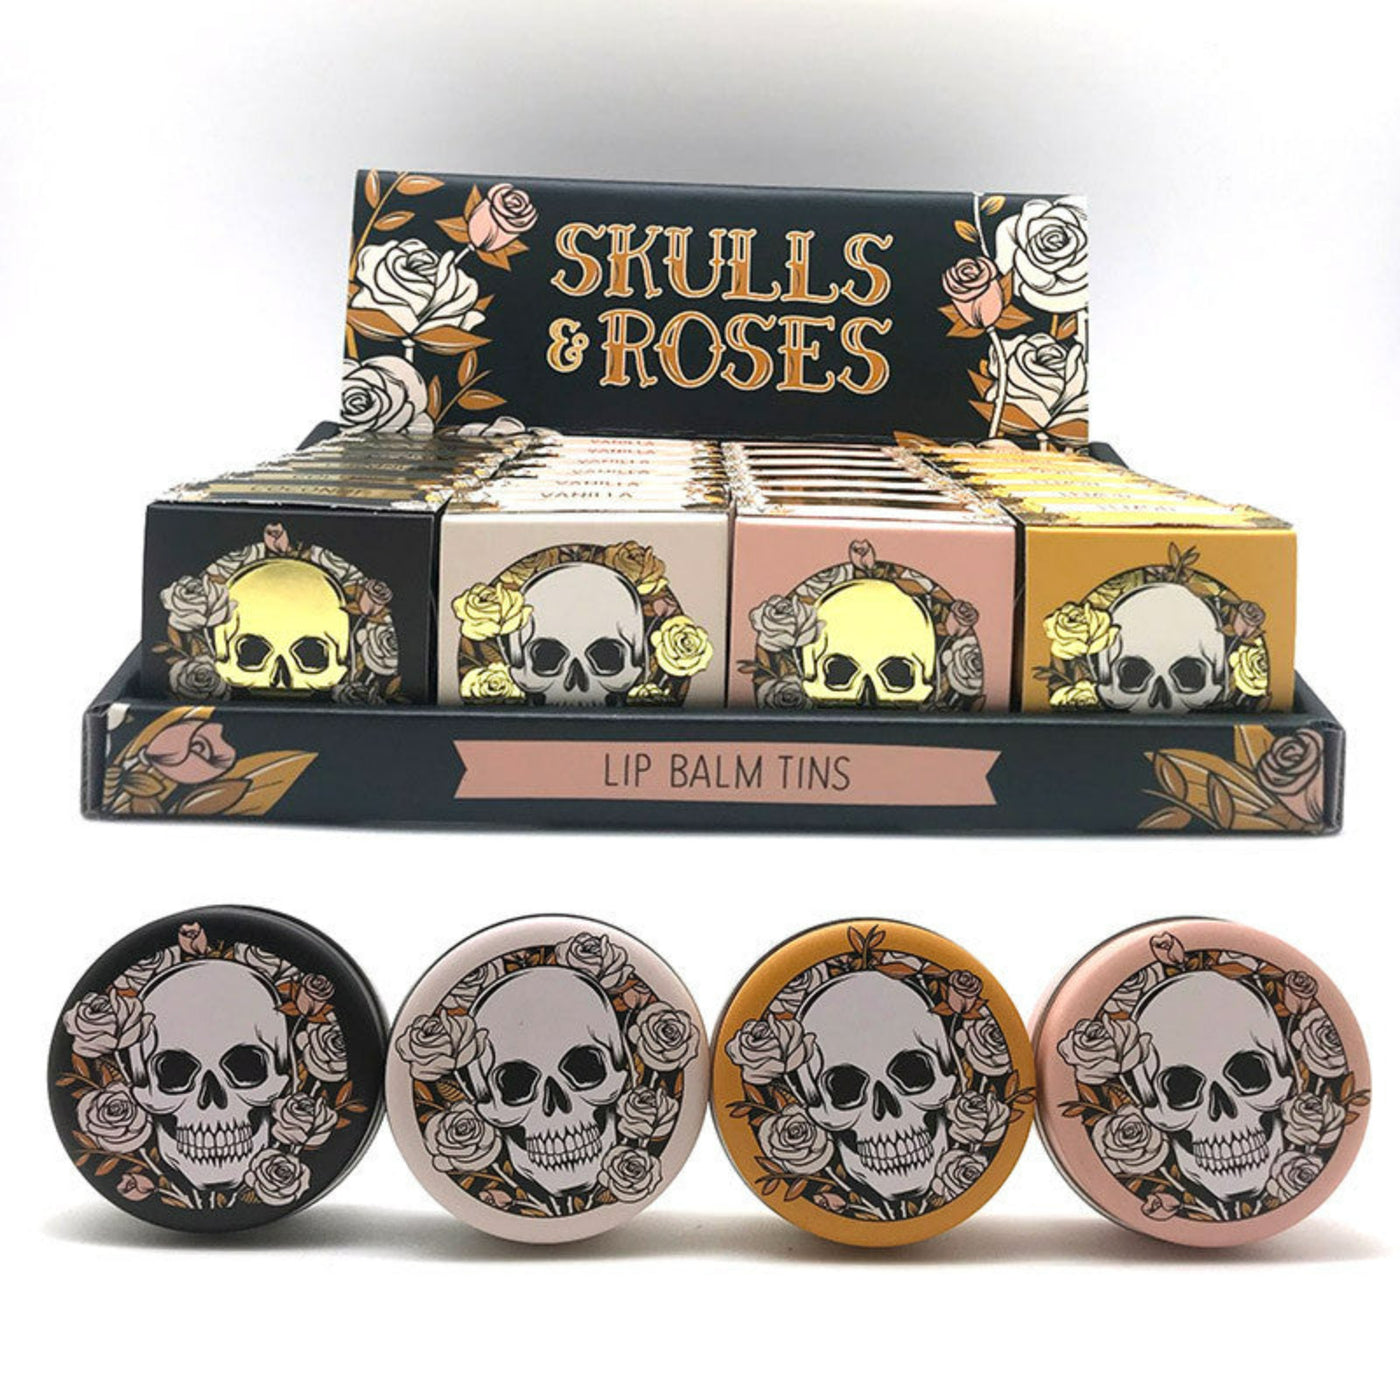 Skull & Roses Lip Balm in a Tin.